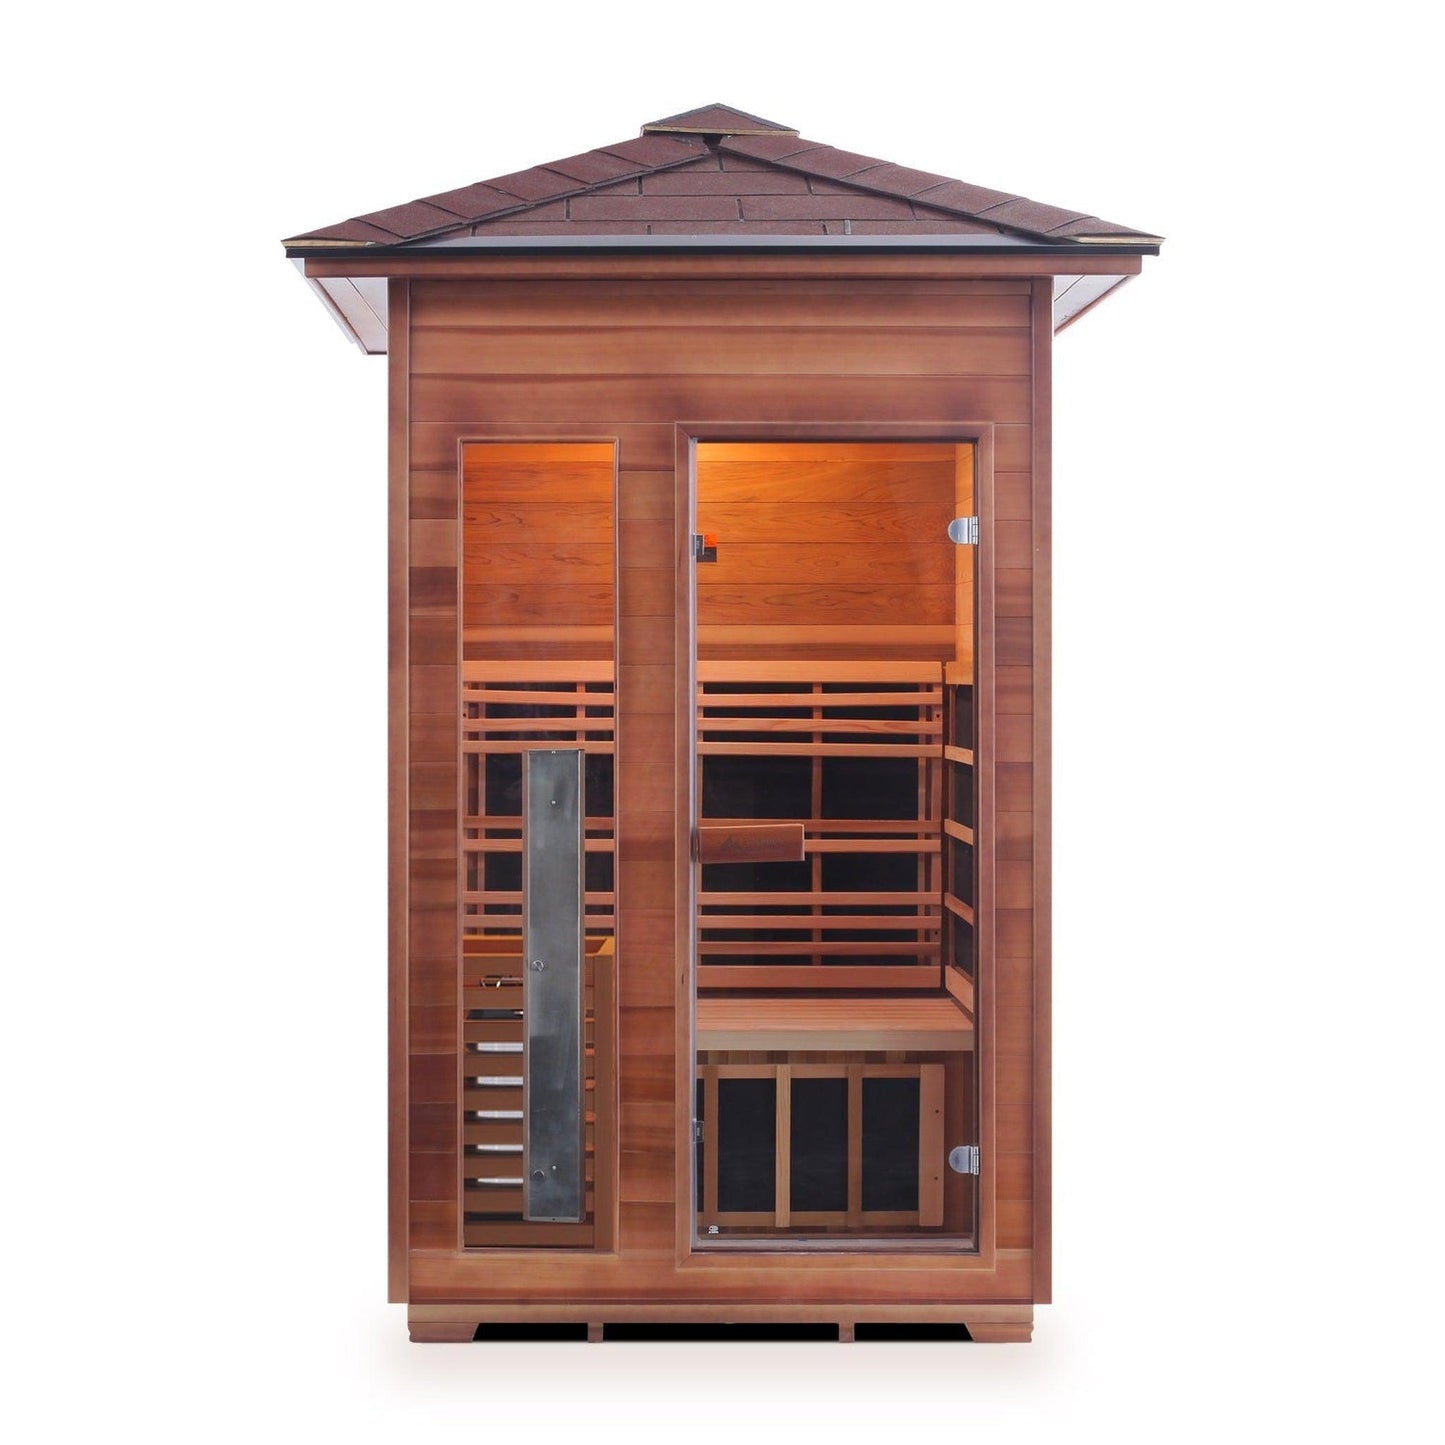 Enlighten InfraNature Duet Diamond 2-Person Peak Roof Hybrid Infrared/Traditional Outdoor Sauna